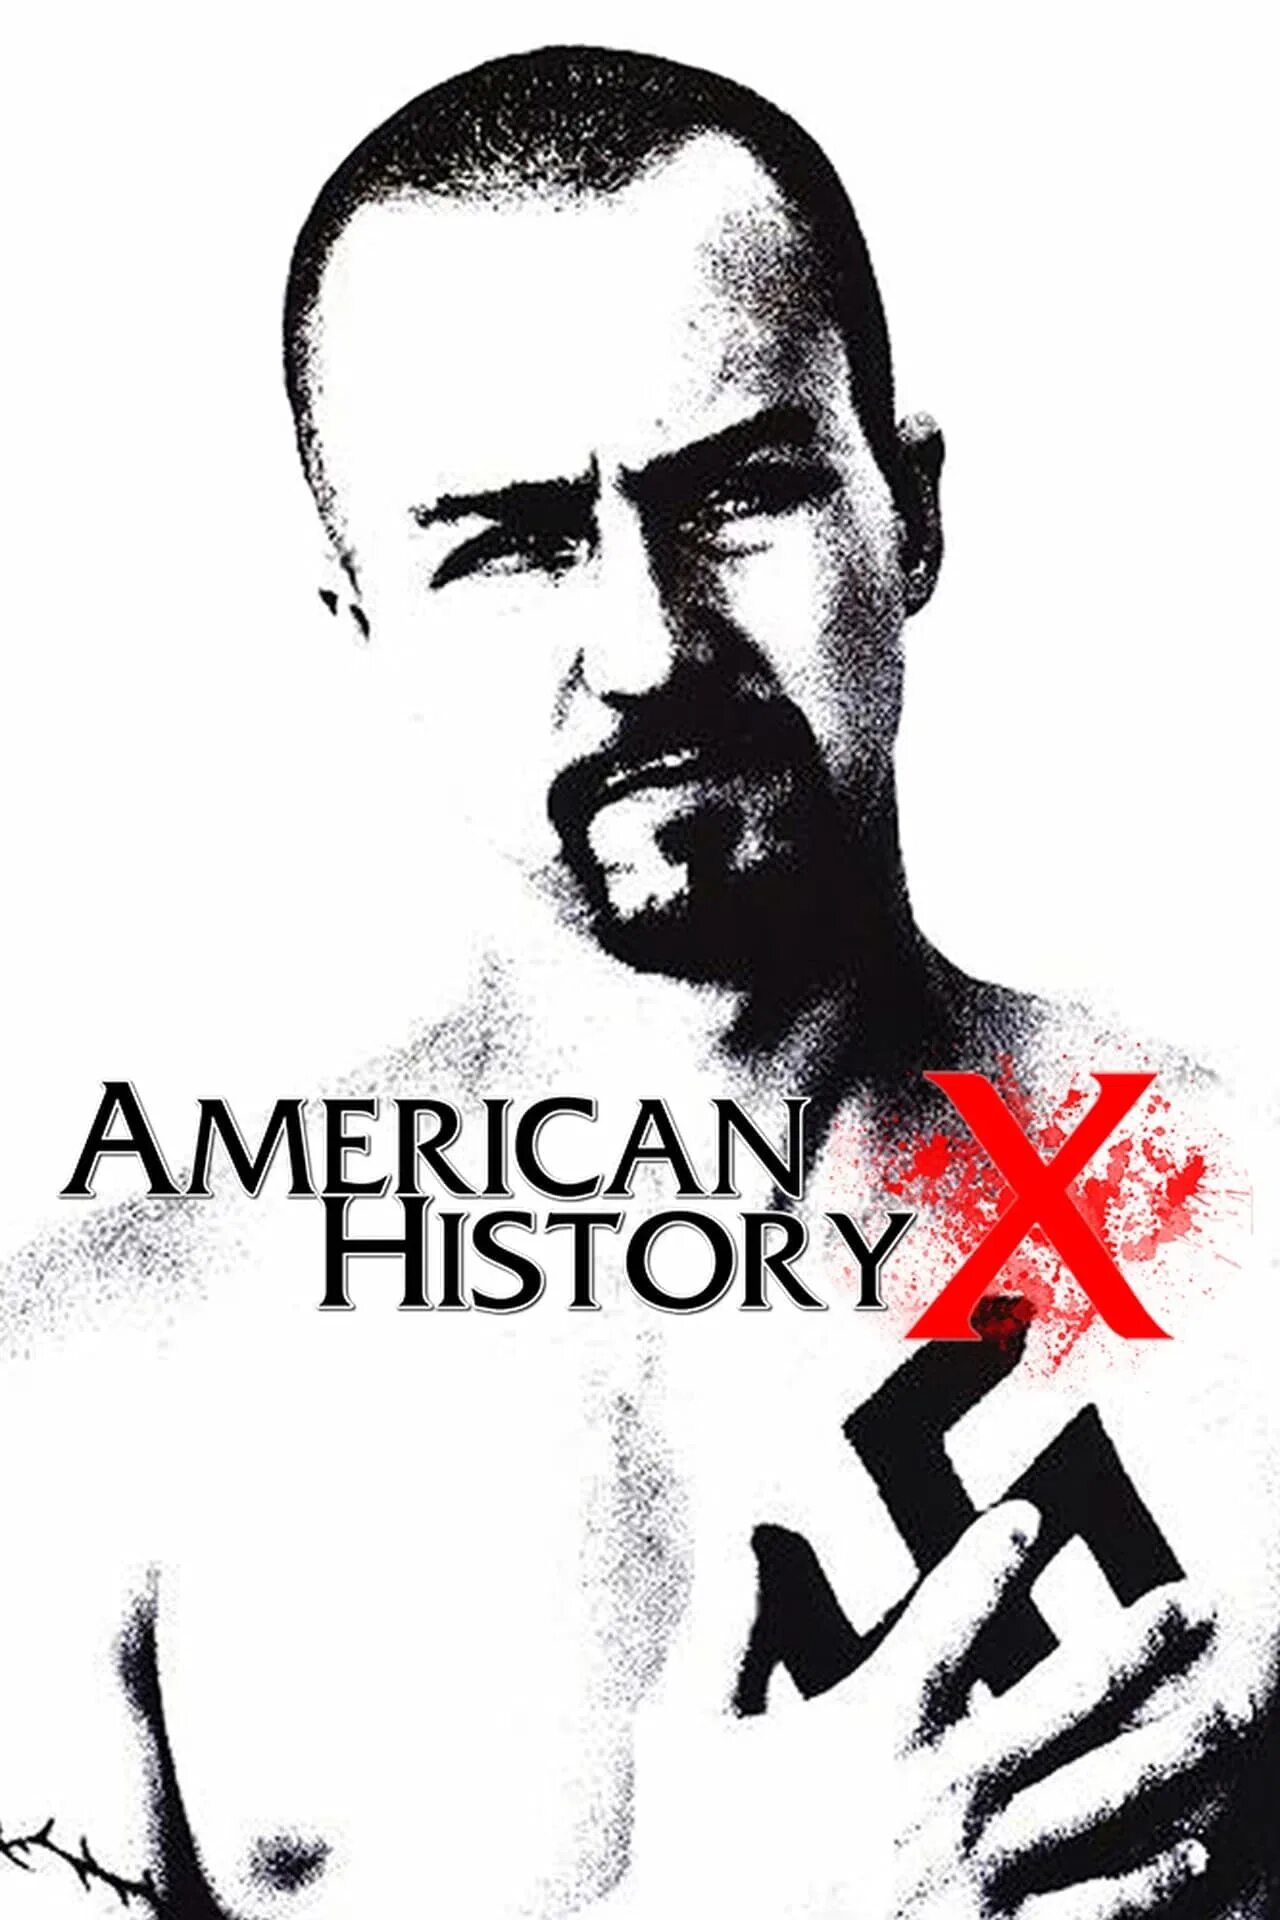 Ам икс. Американская история х (American History x, 1998). Американская история х Дэнни Виньярд.